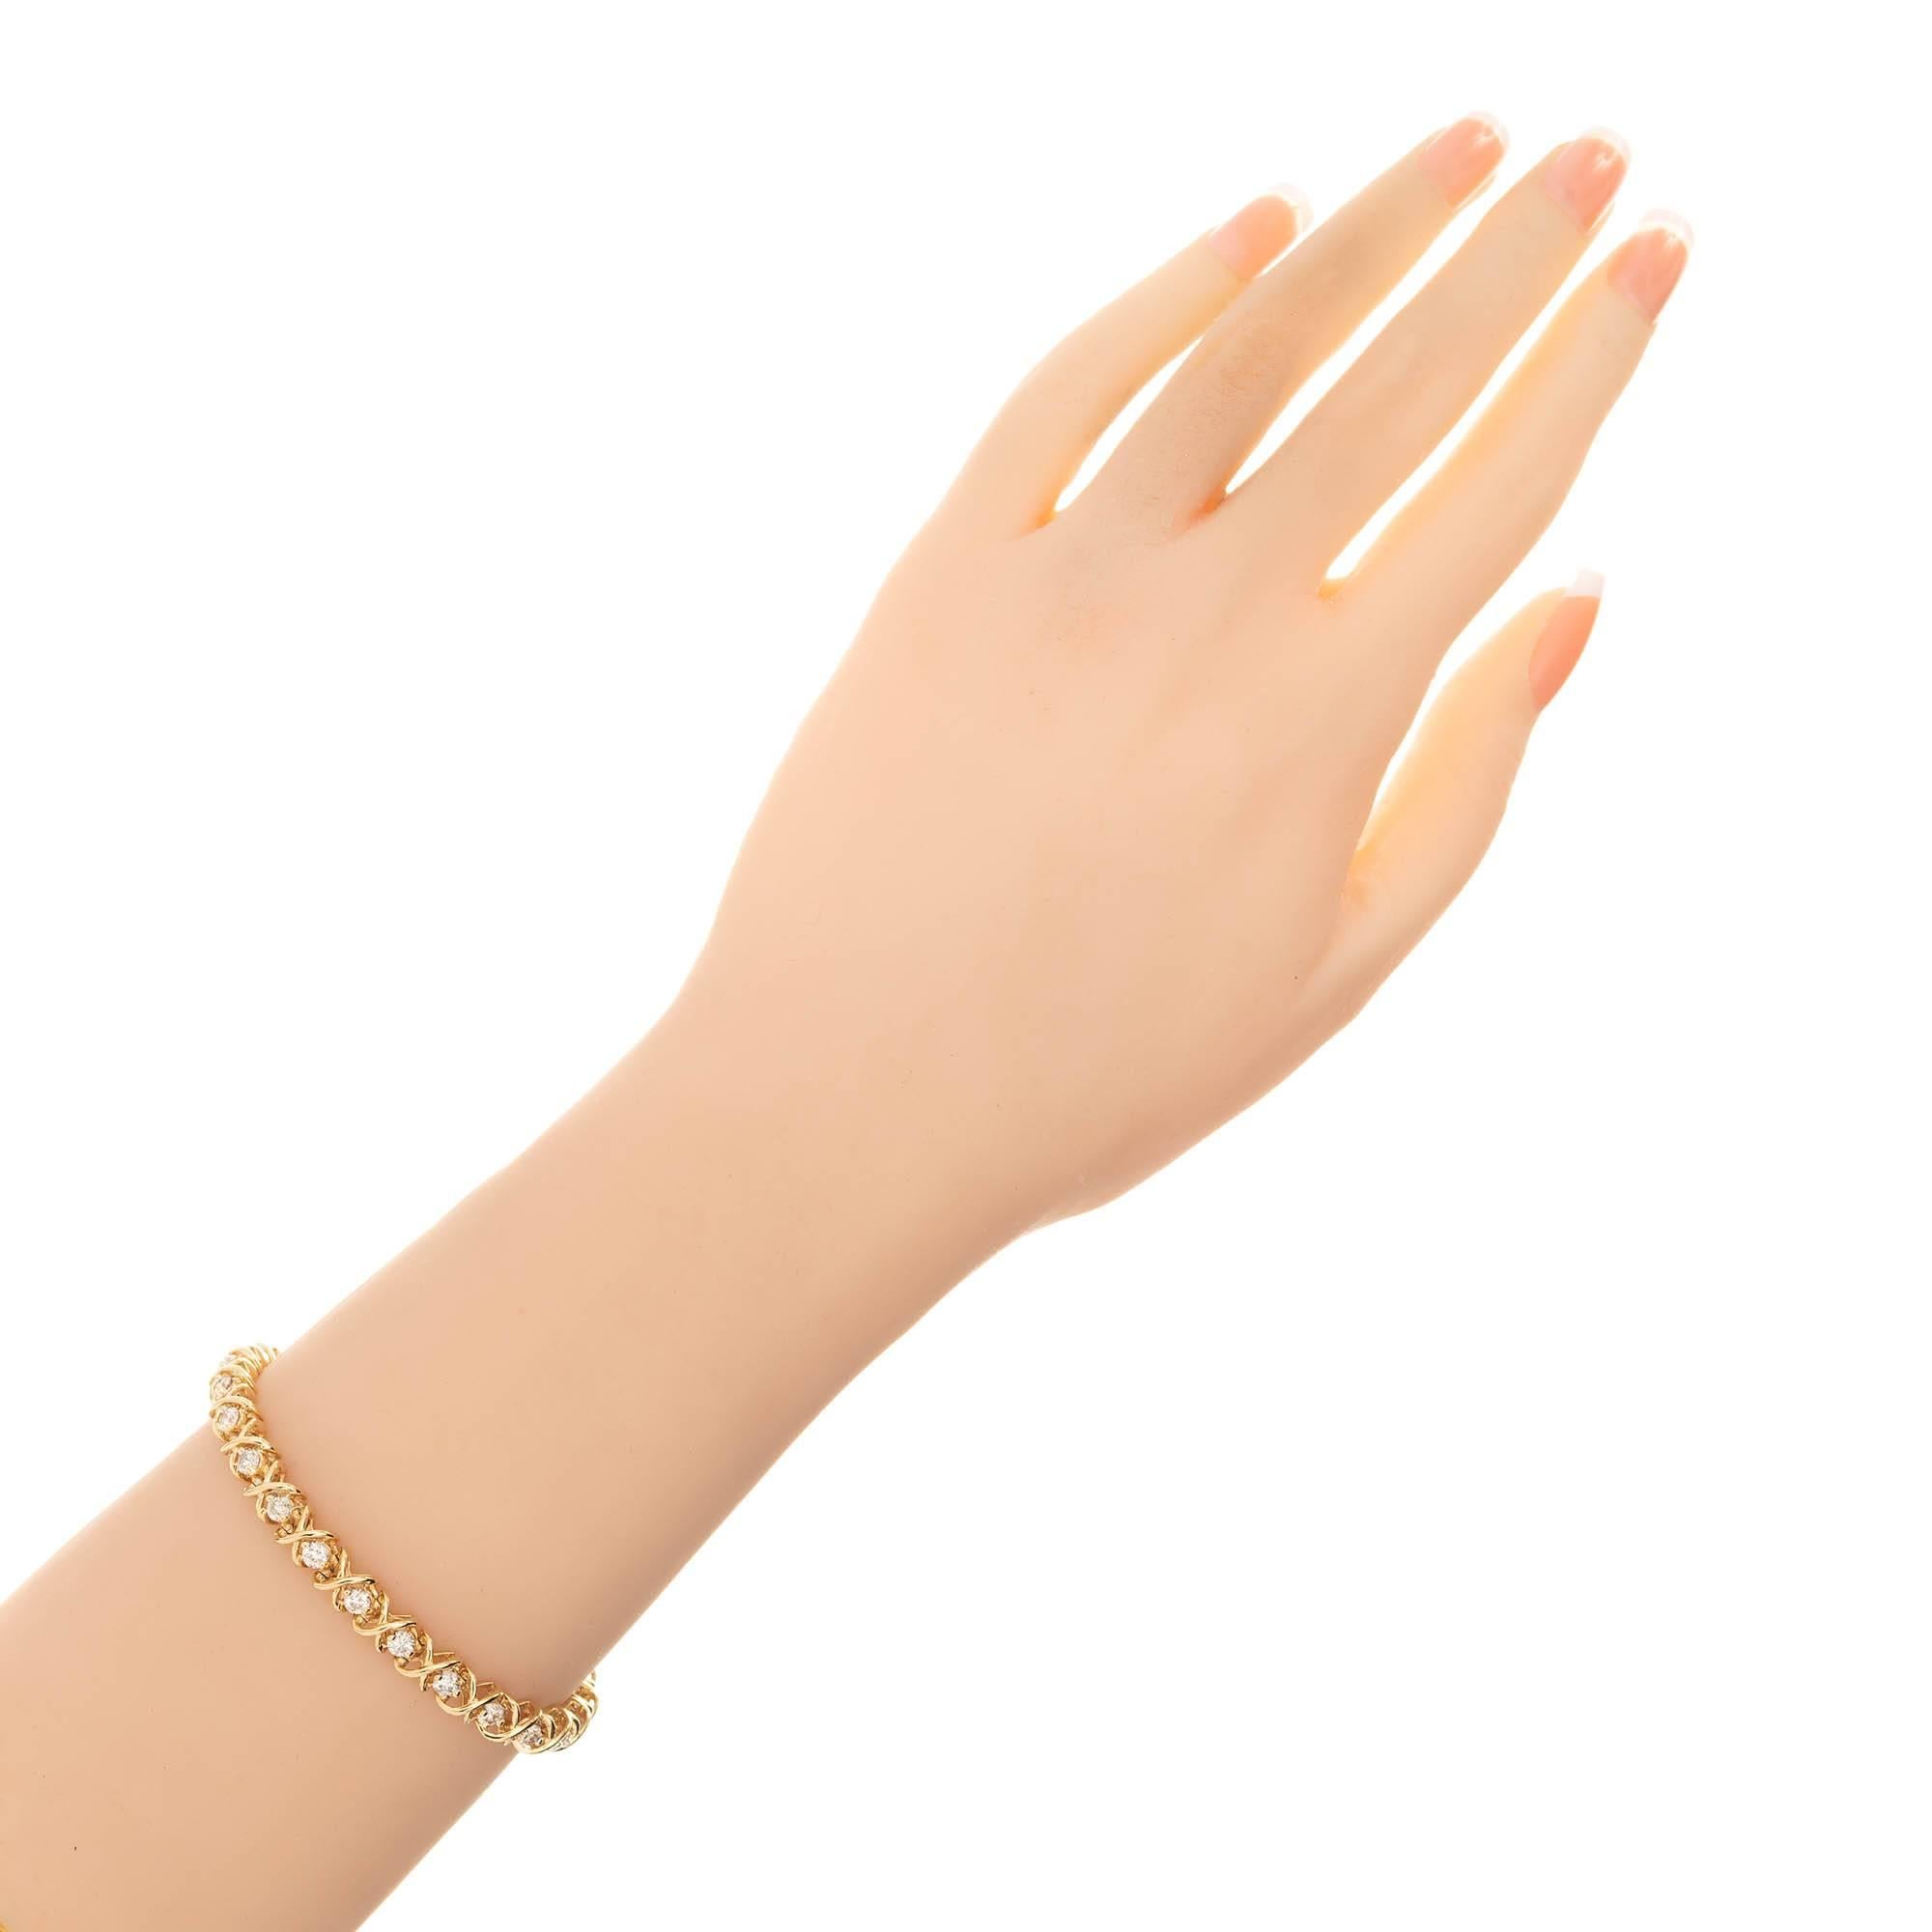 325 gold bracelet